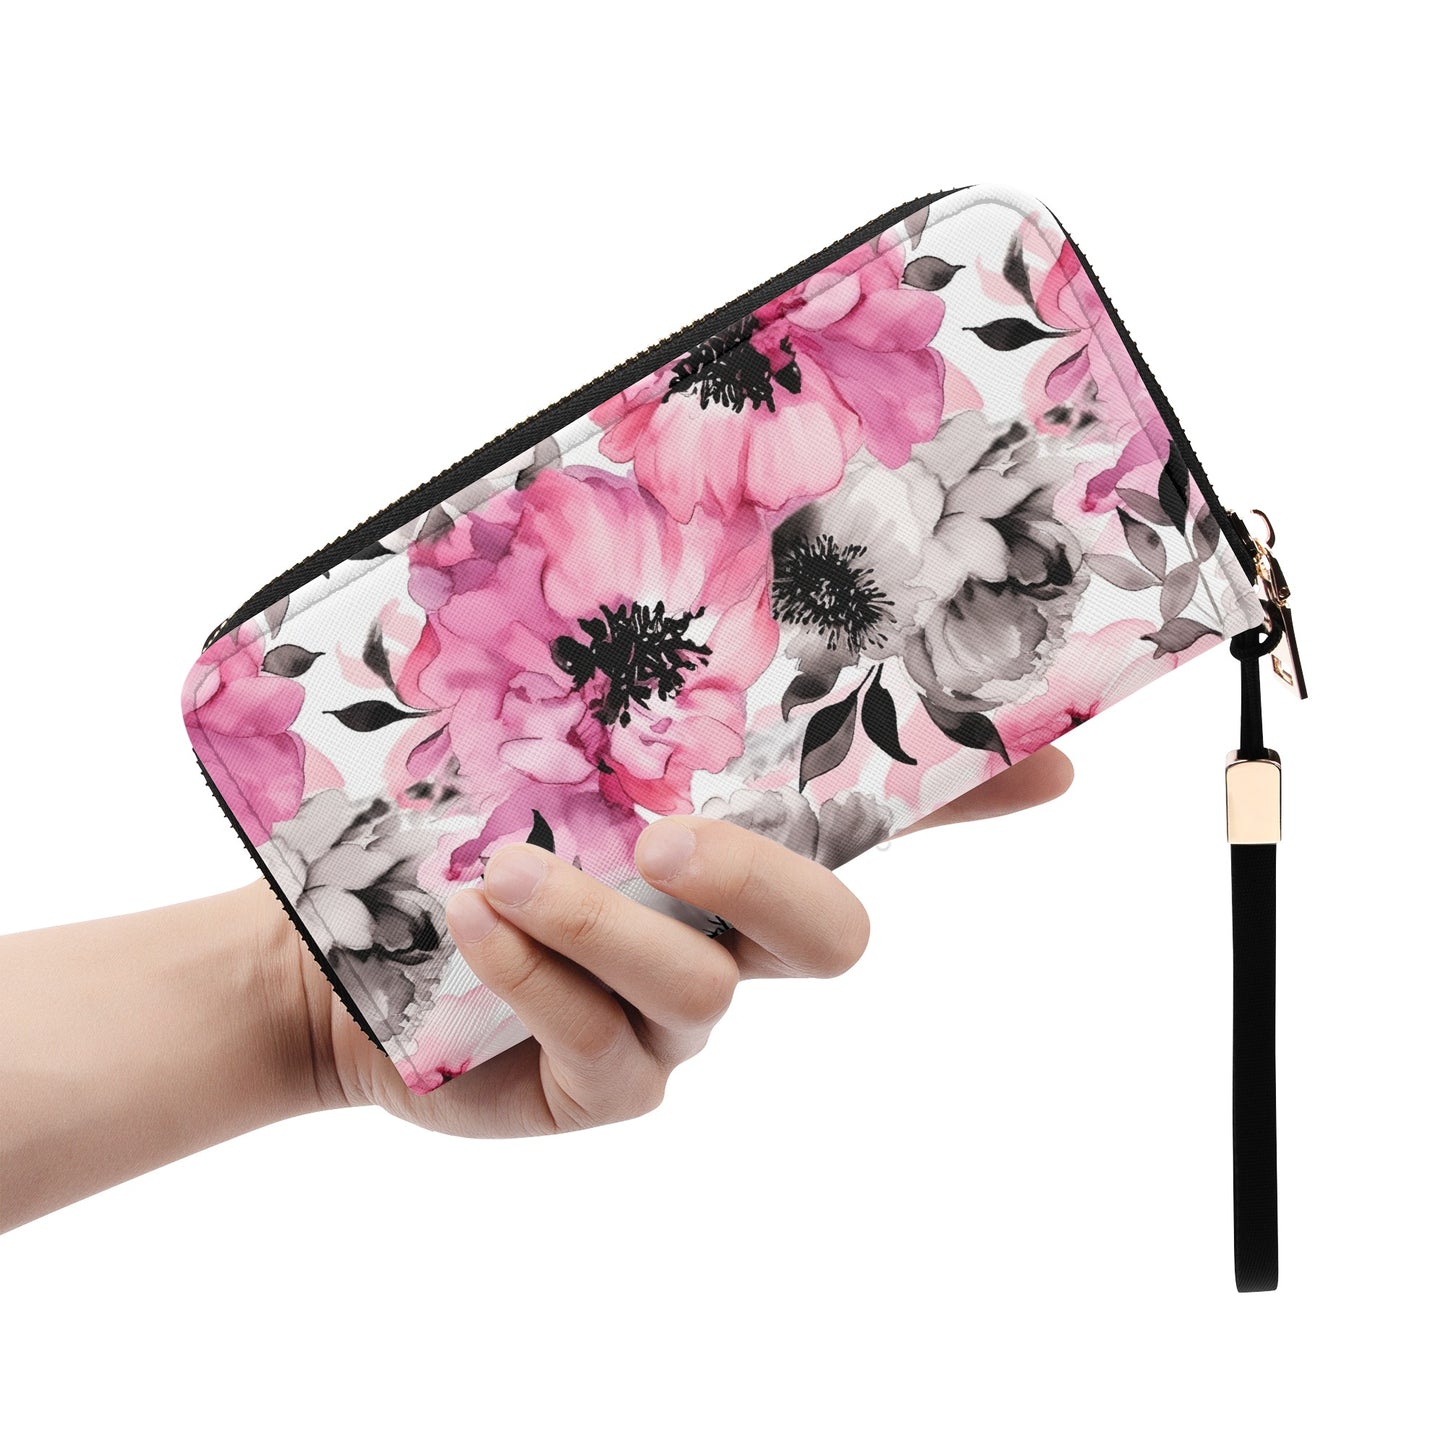 Graceful Elegance: Large Pink and Grey Watercolor Flower Design - Wristlet Wallet Leather (PU)